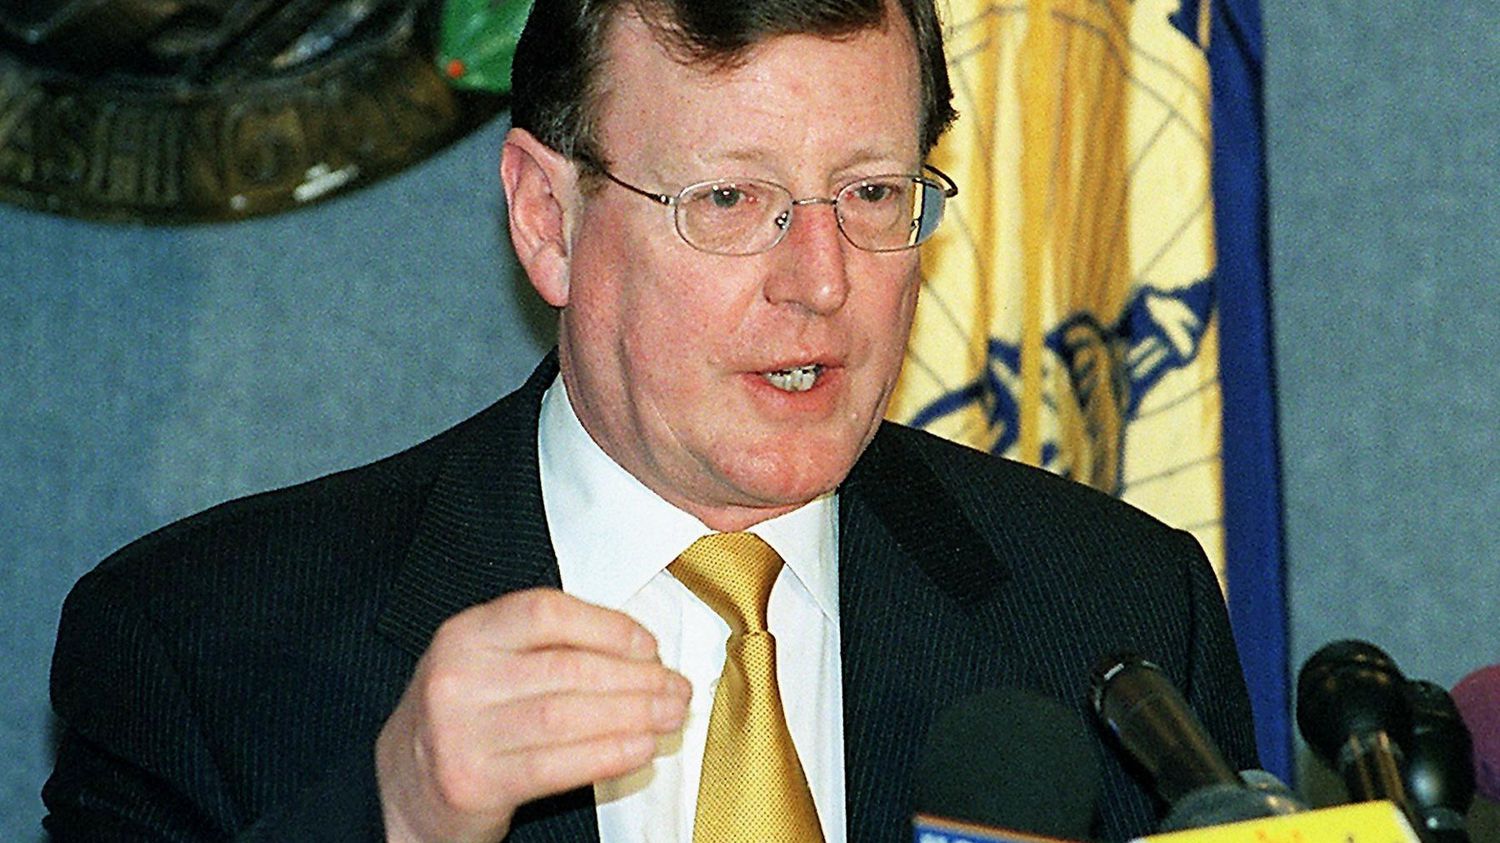 Northern Ireland: Former Prime Minister David Trimble dies aged 77
